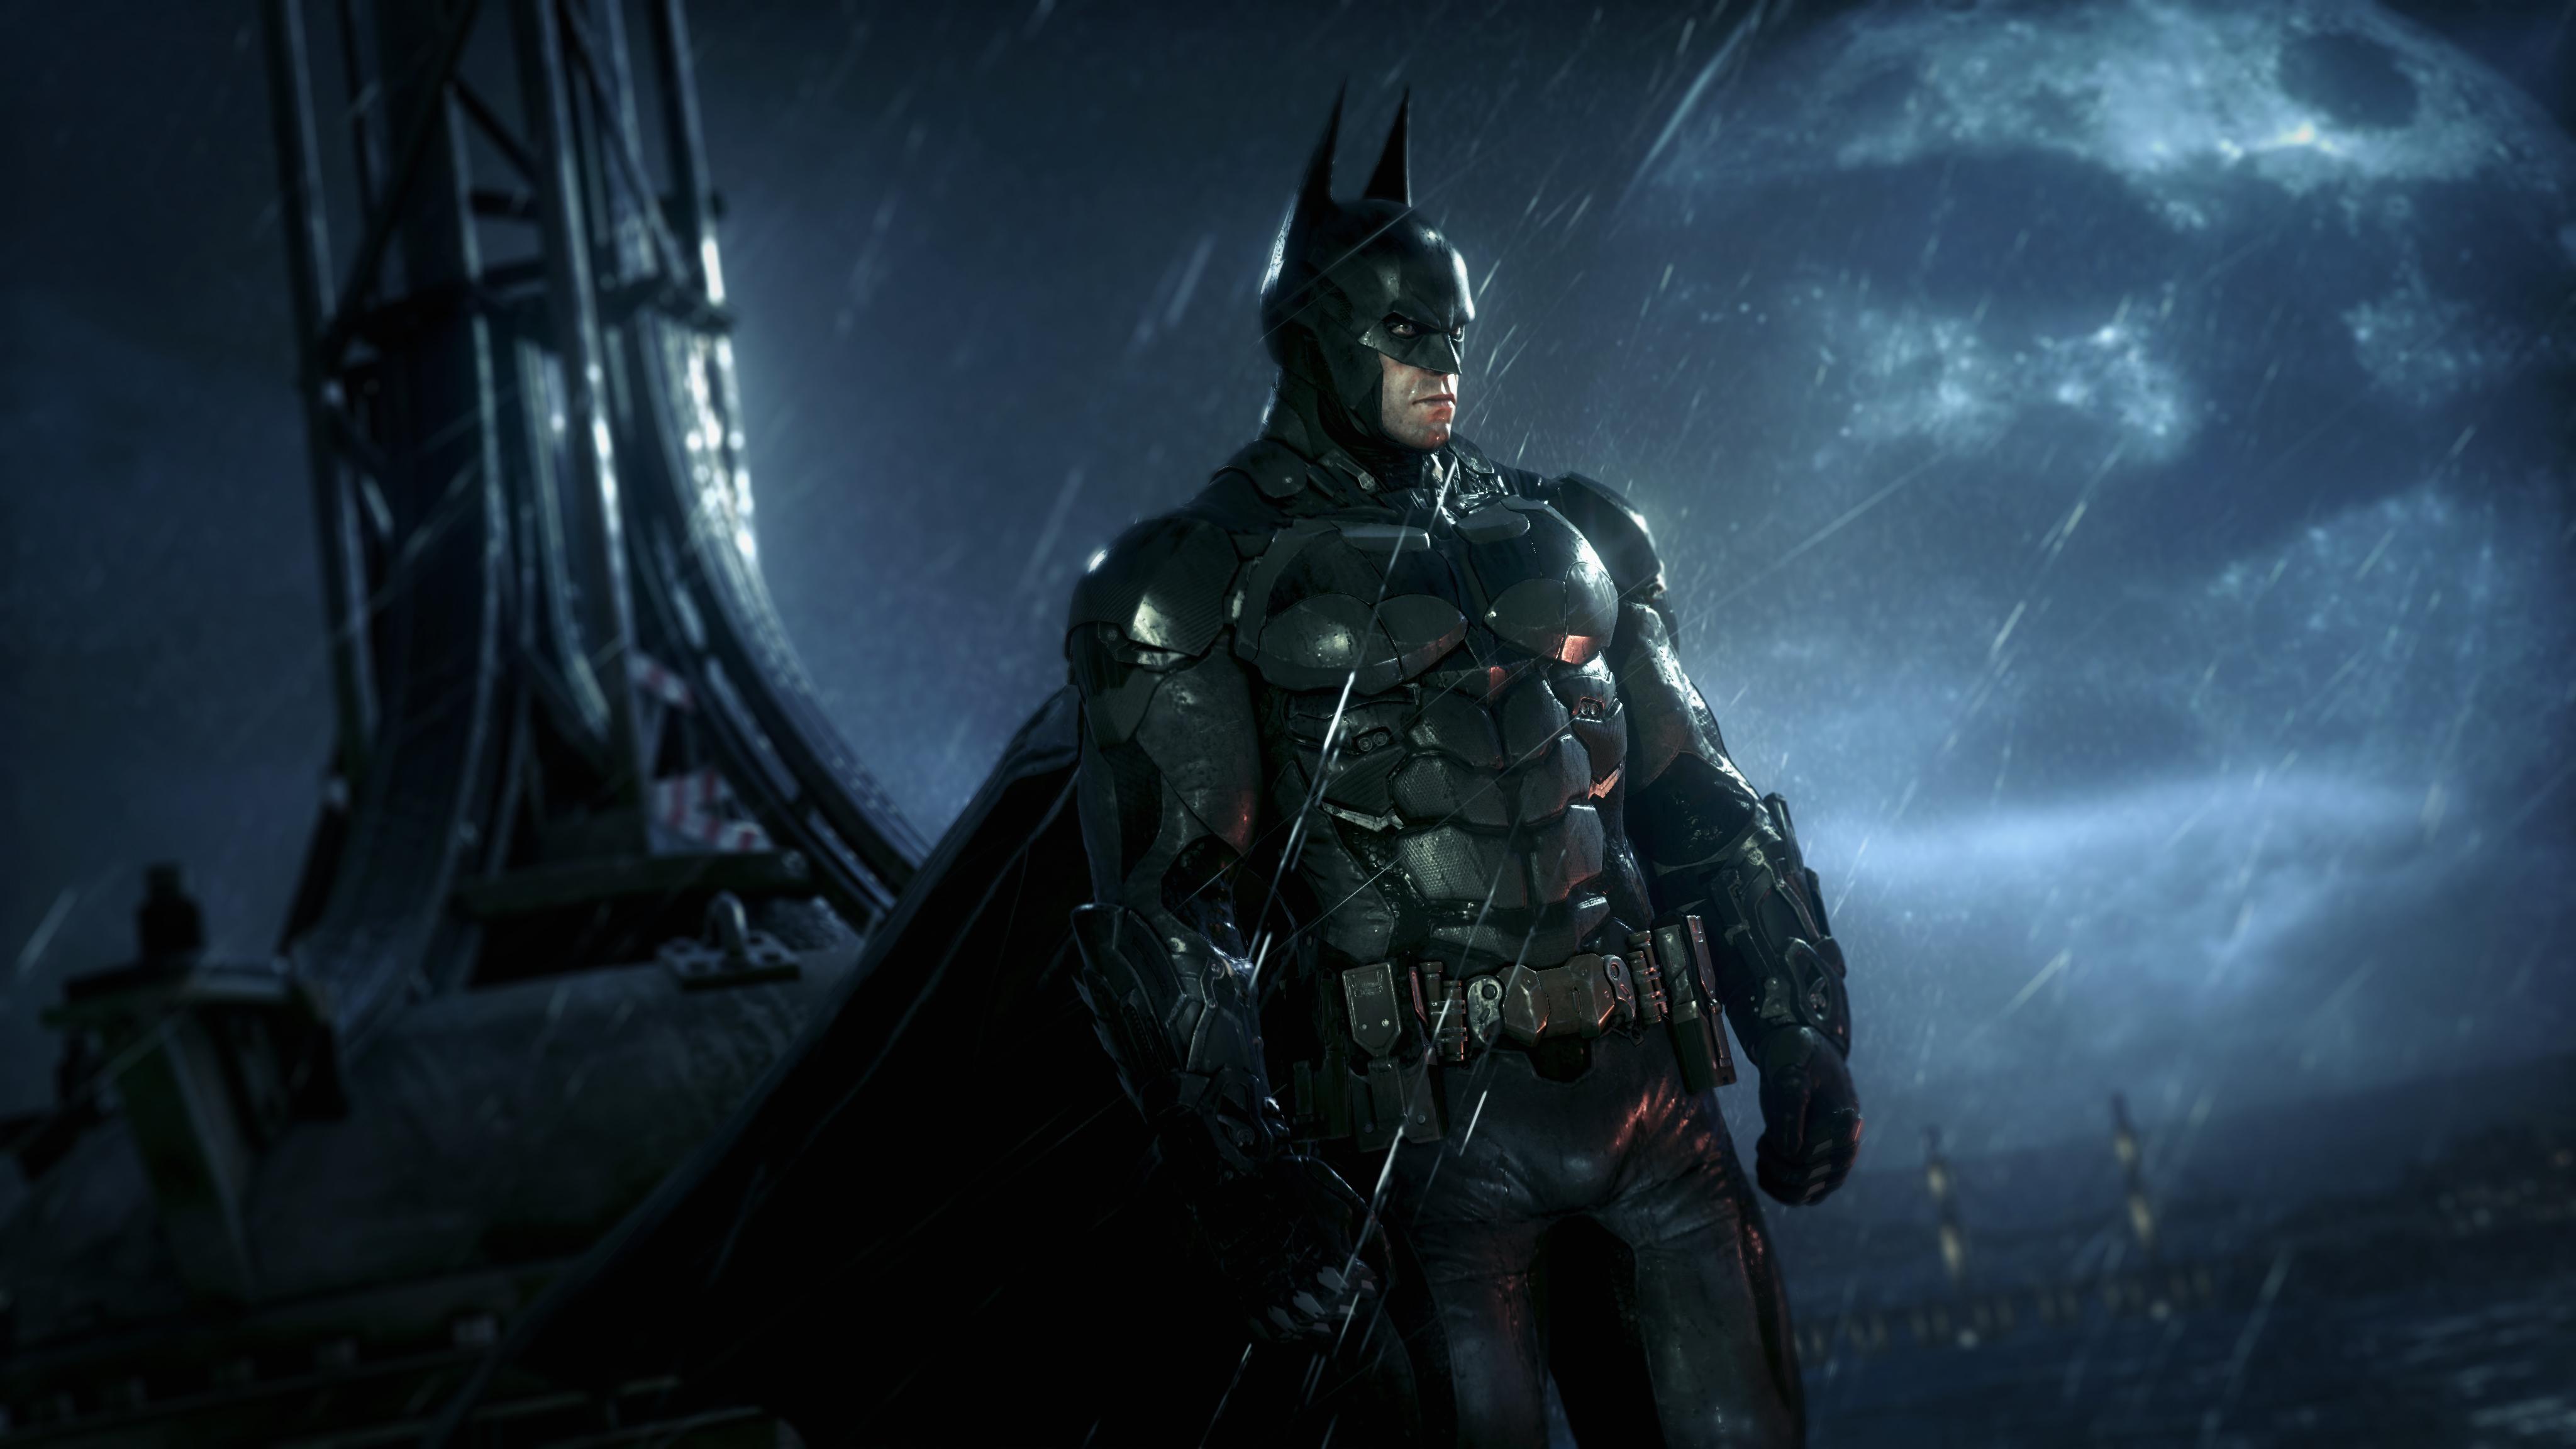 4096 x 2304 · jpeg - Batman: Arkham Knight 4k Ultra HD Wallpaper | Background Image | 4096x2304